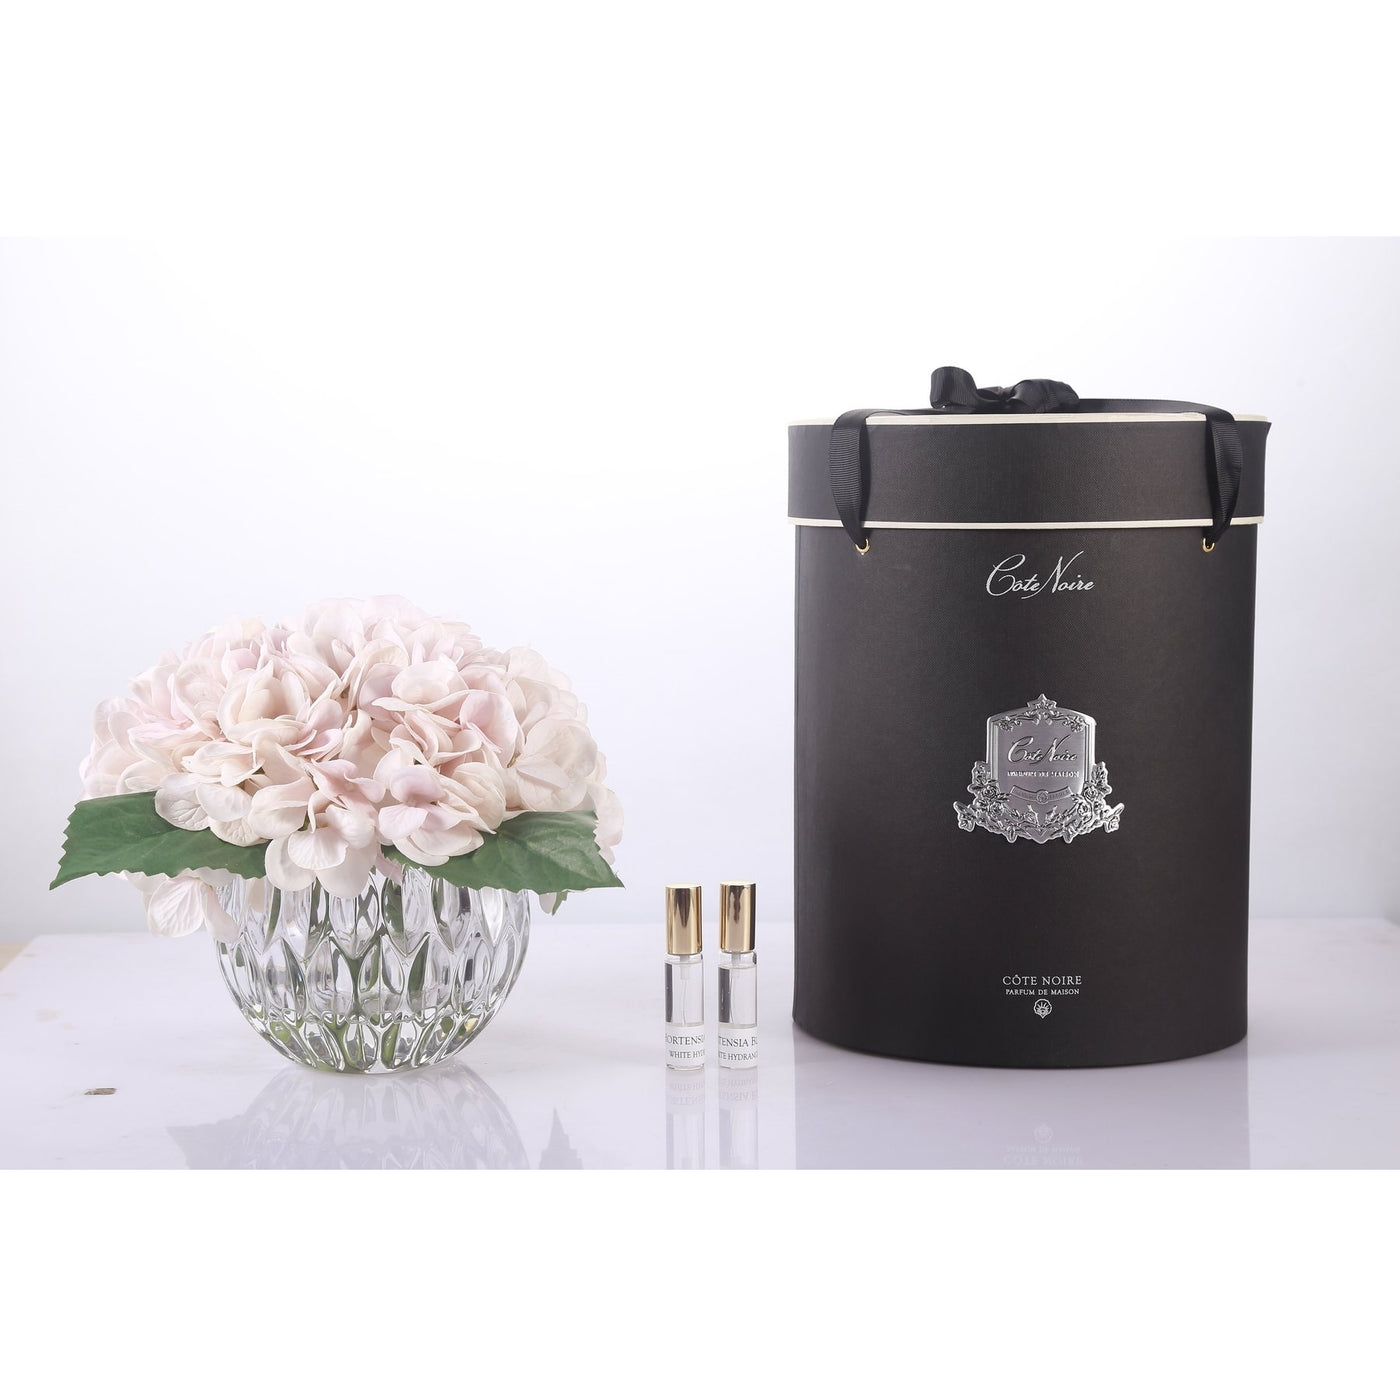 Hydrangeas Blush Luxury collection